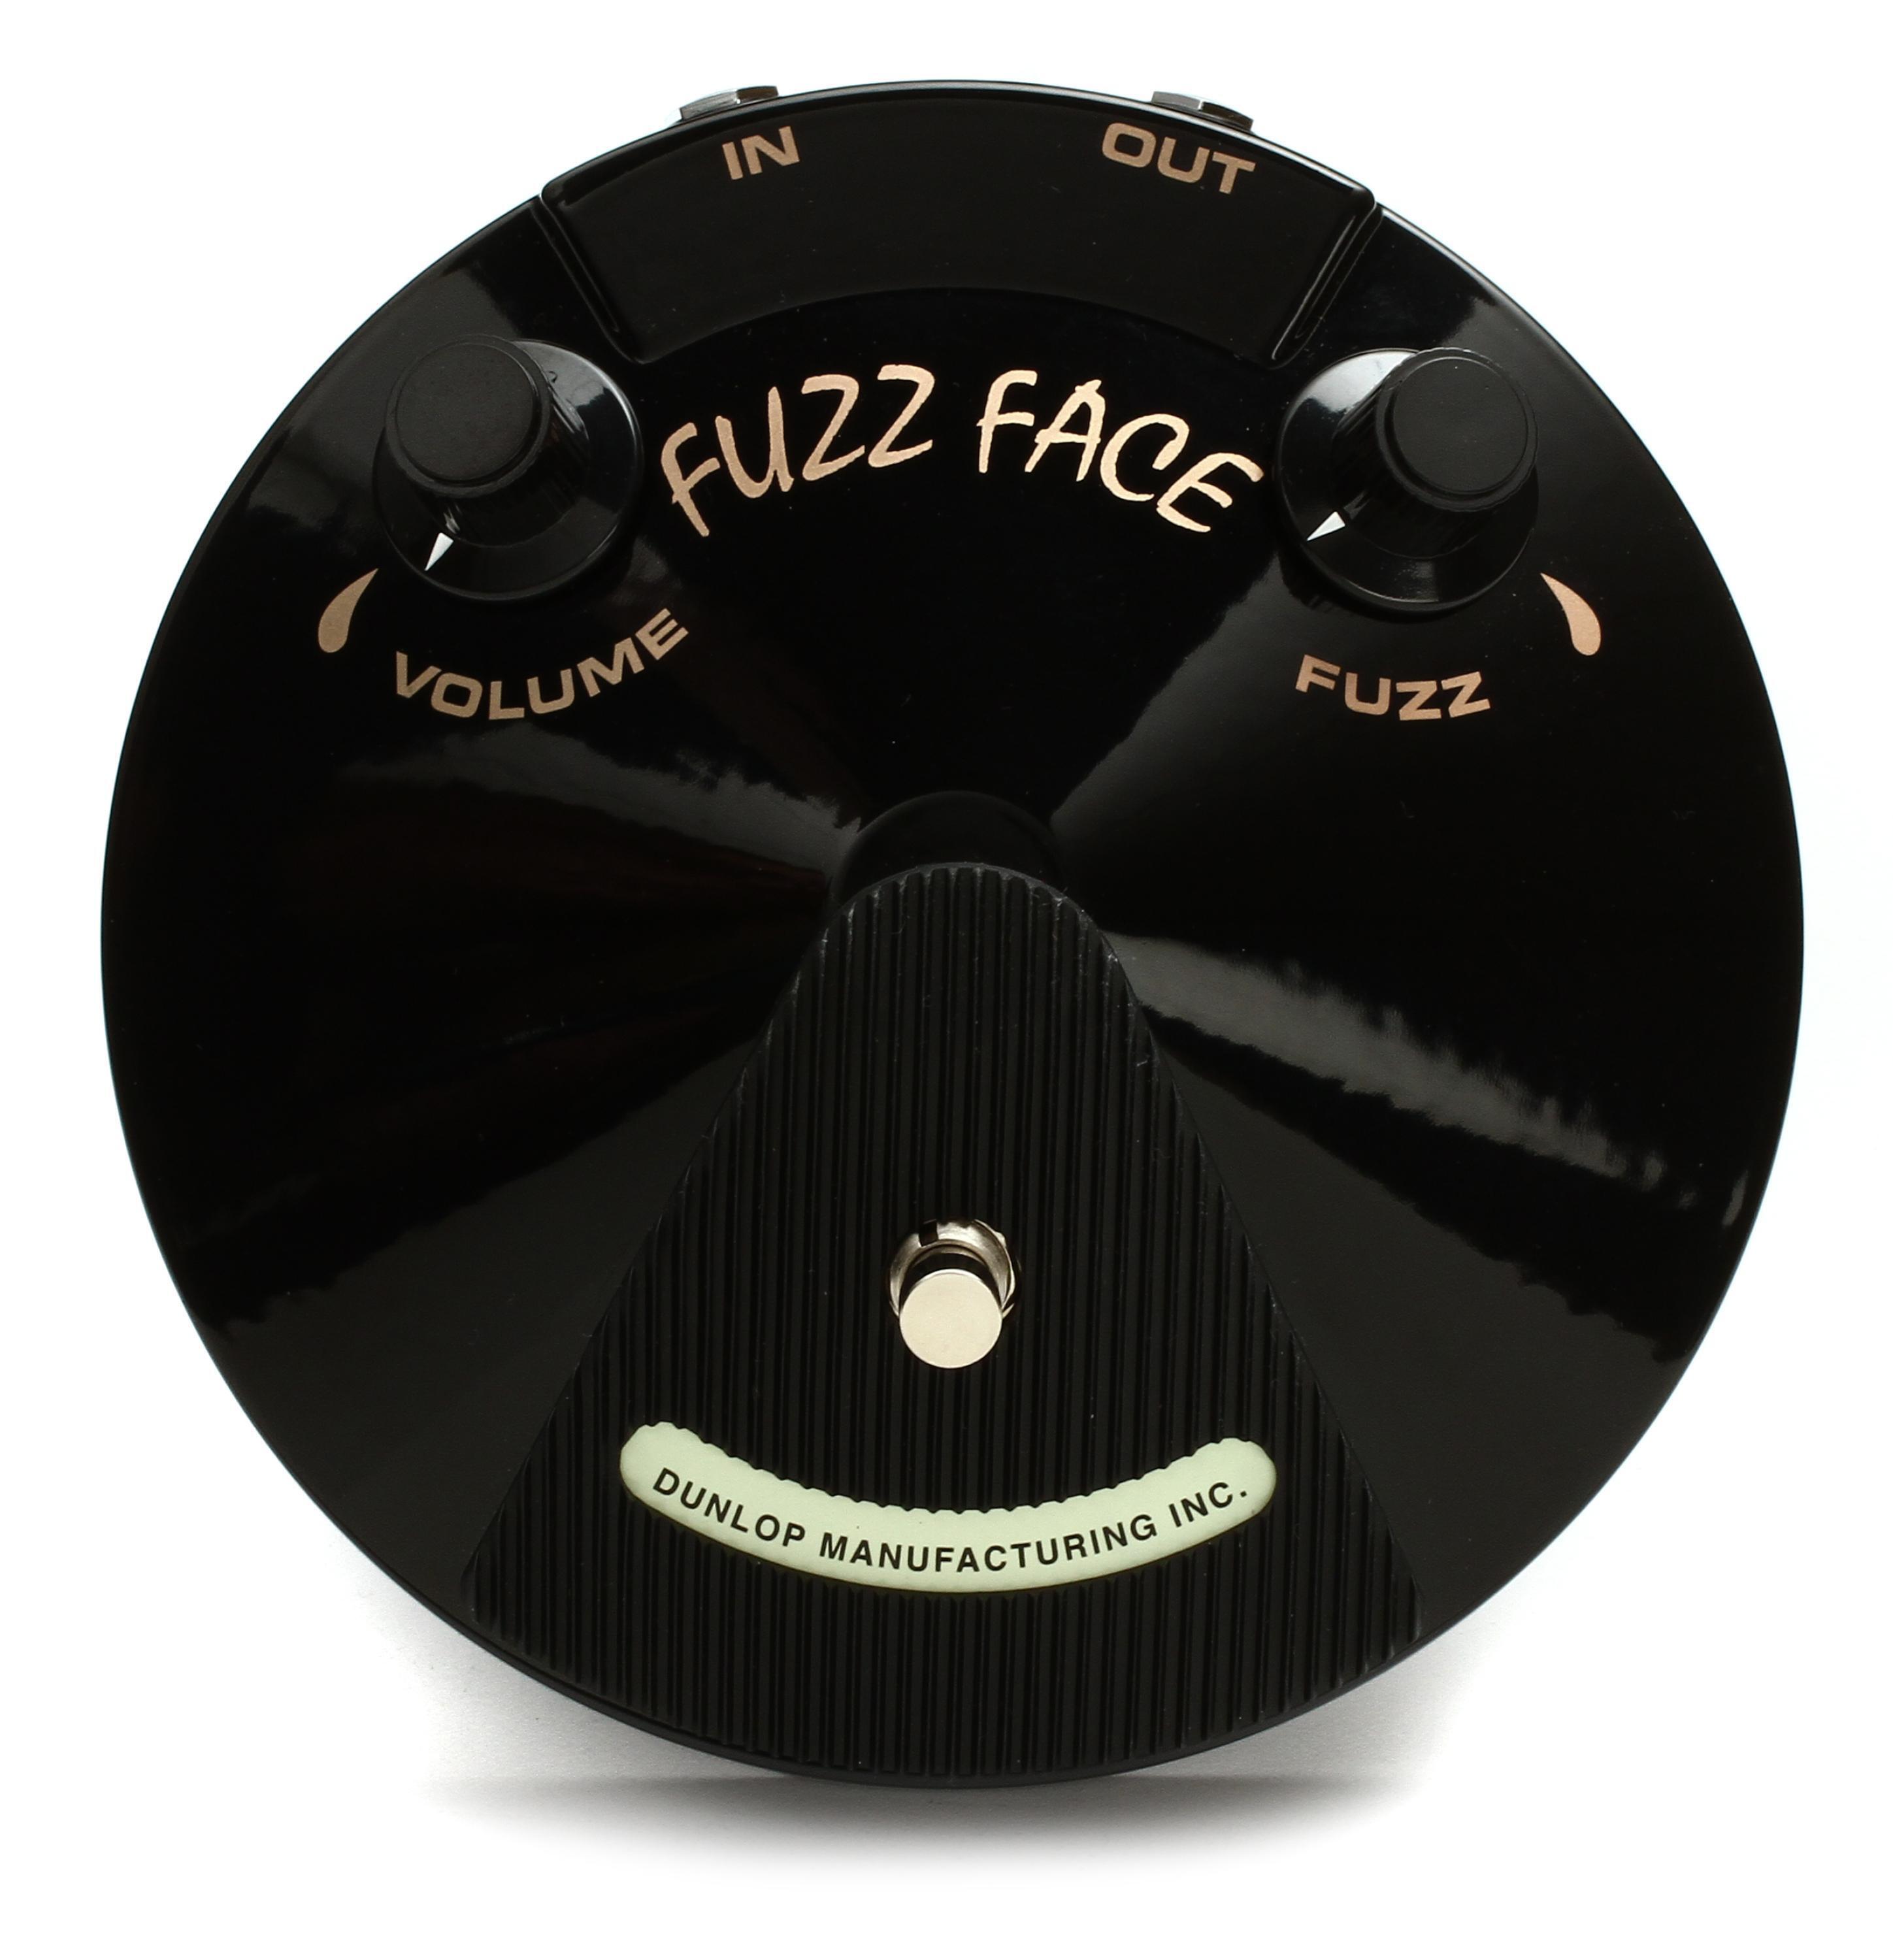 Dunlop Joe Bonamassa Signature Fuzz Face Reviews | Sweetwater